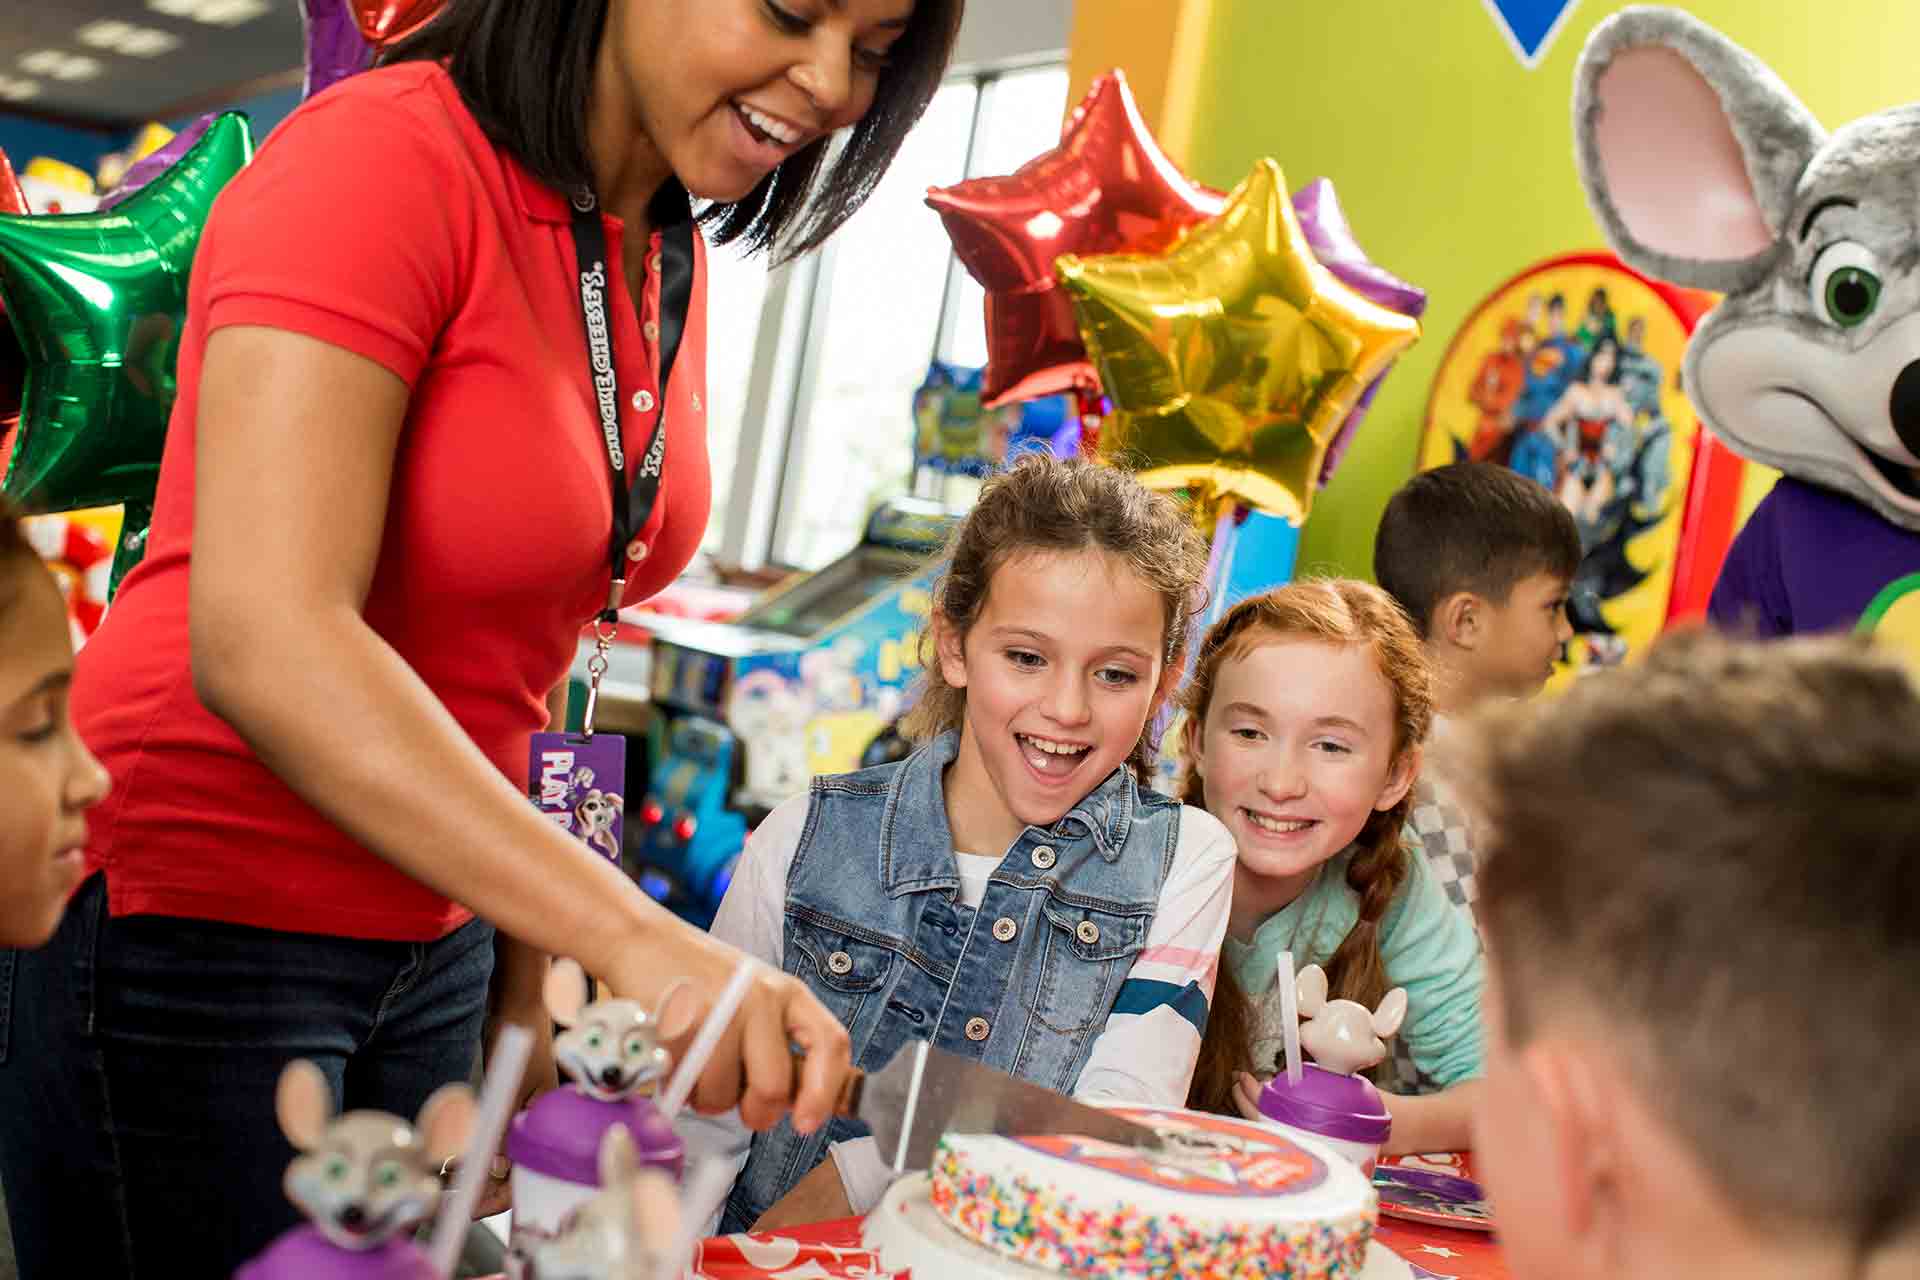 Employee cutting cake for kids